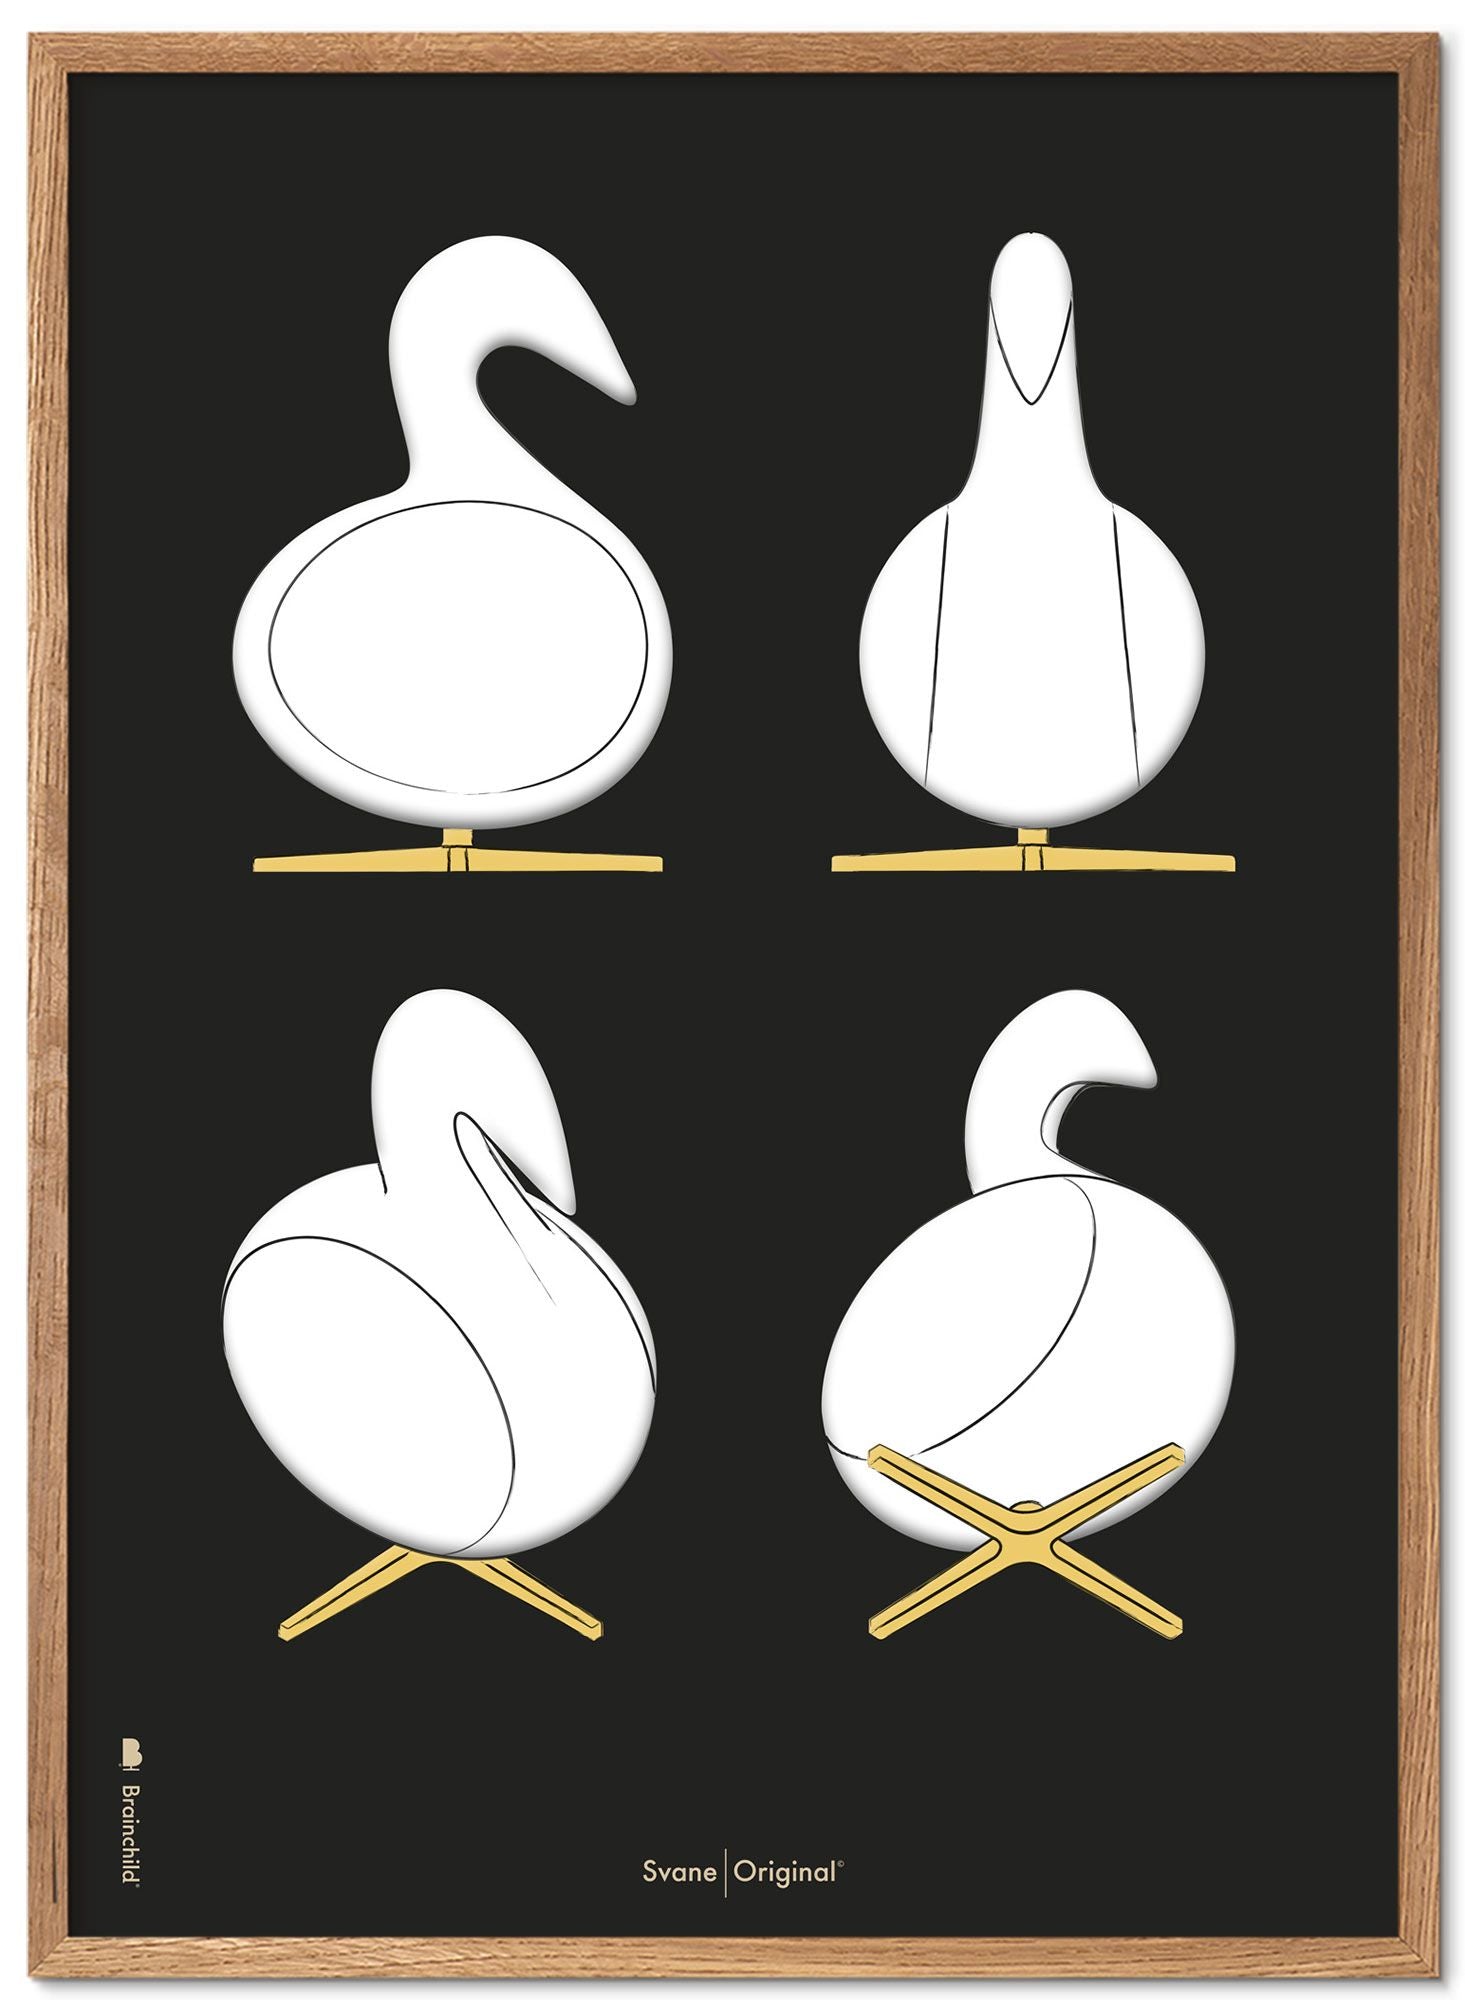 Swan Swan Skan Sketches Affiche Faire en bois clair 70x100 cm, fond noir